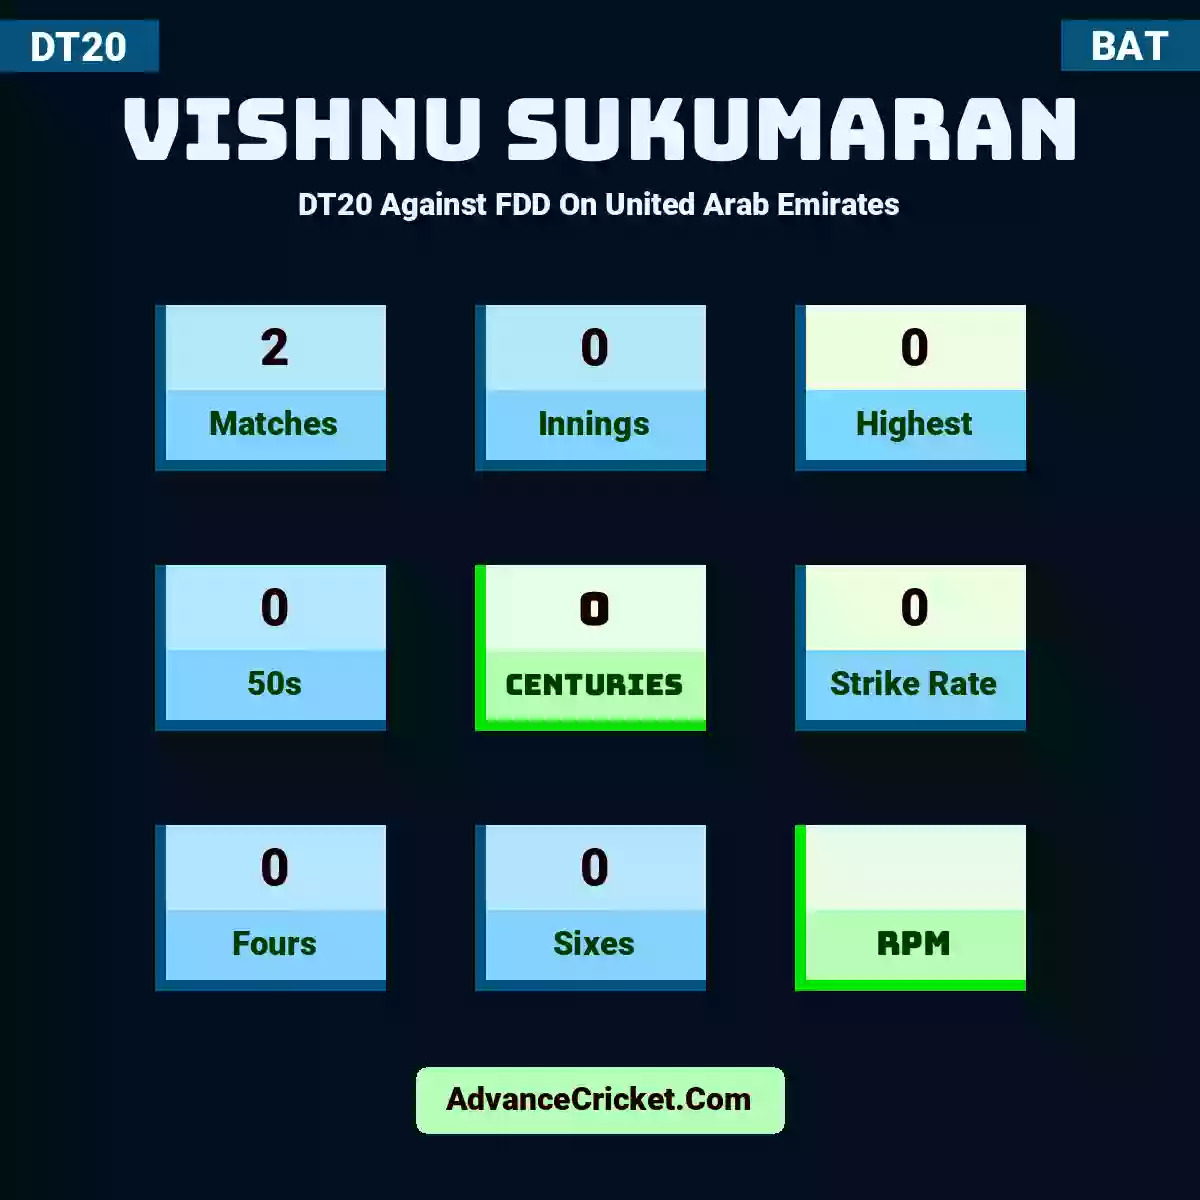 Vishnu Sukumaran DT20  Against FDD On United Arab Emirates, Vishnu Sukumaran played 2 matches, scored 0 runs as highest, 0 half-centuries, and 0 centuries, with a strike rate of 0. V.Sukumaran hit 0 fours and 0 sixes.